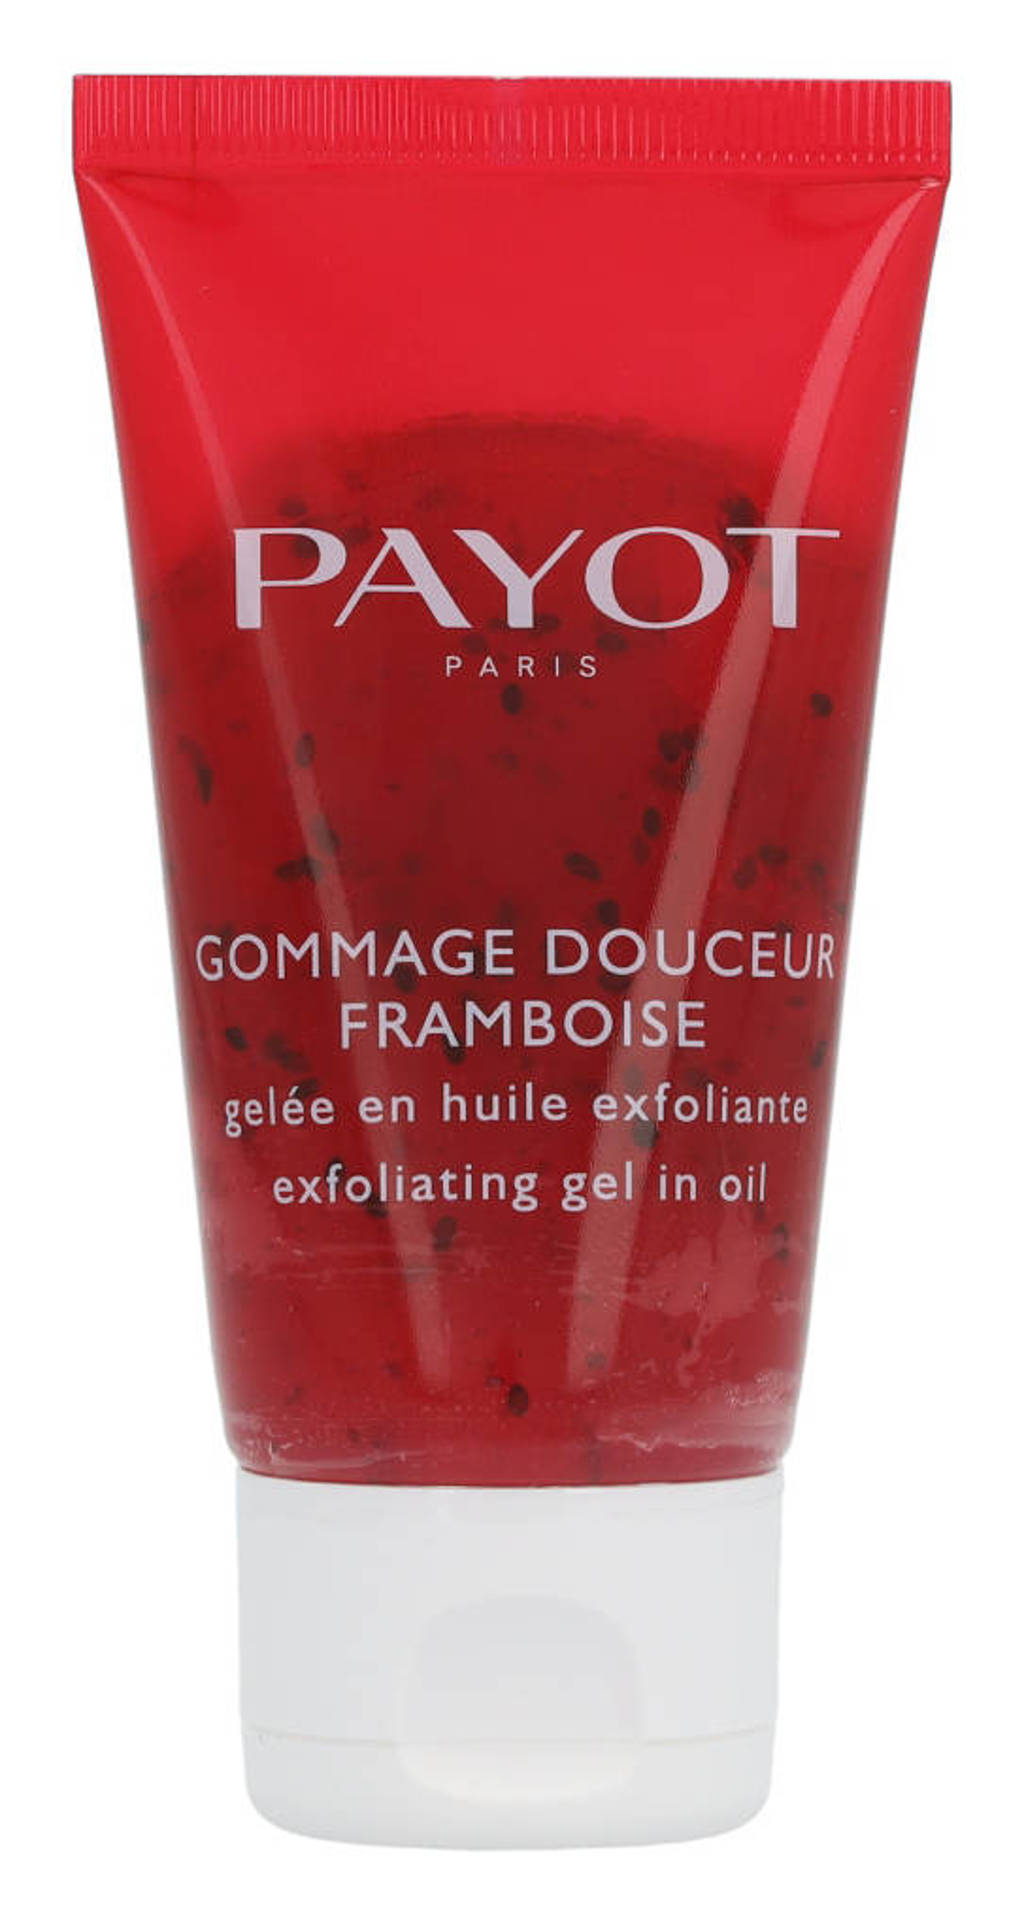 Payot Gommage Douceur Framboise gezichtsscrub - 50 ml